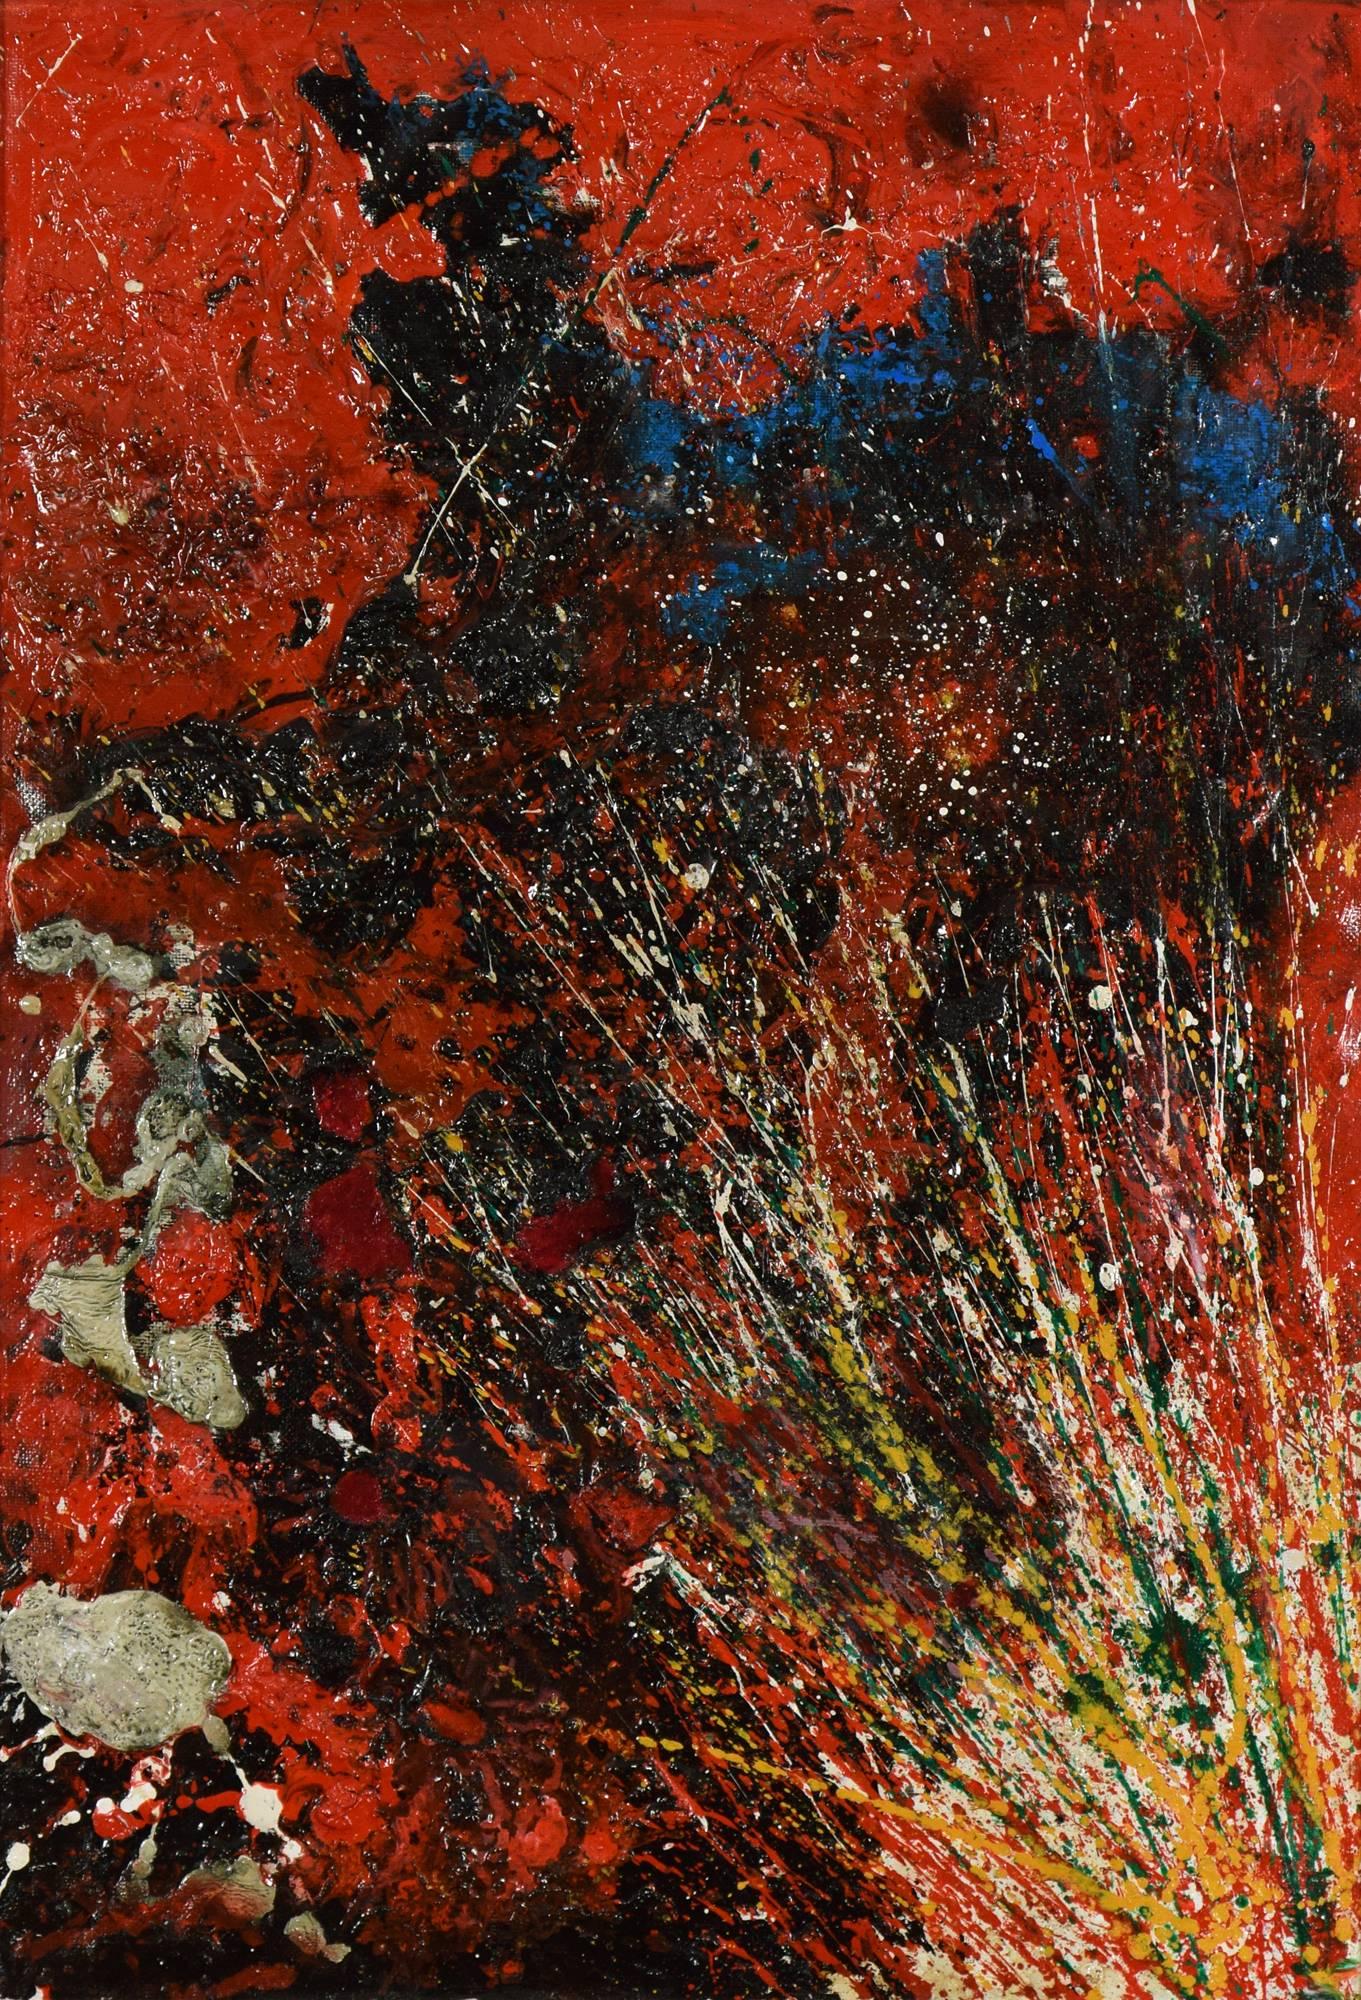 Red Composition by TOSHIMITSU ÏMAI - Contemporain, Abstrait, Huile sur toile